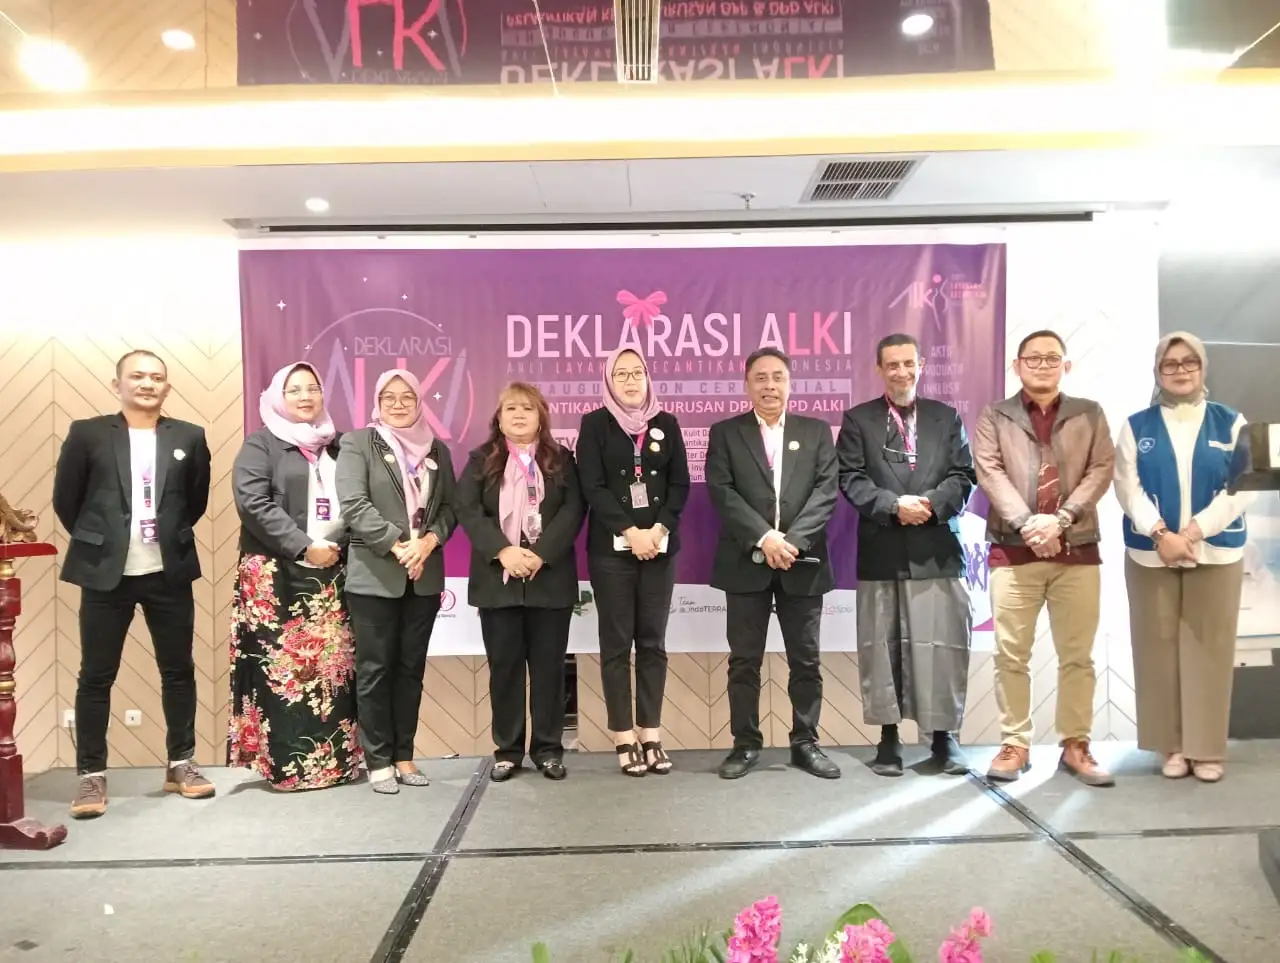 Deklarasi dan Pelantikan Dewan Pimpinan Pusat, Dewan Pimpinan Daerah, dan Dewan Pimpinan Cabang Organisasi Ahli Layanan Kecantikan Indonesia (ALKI)